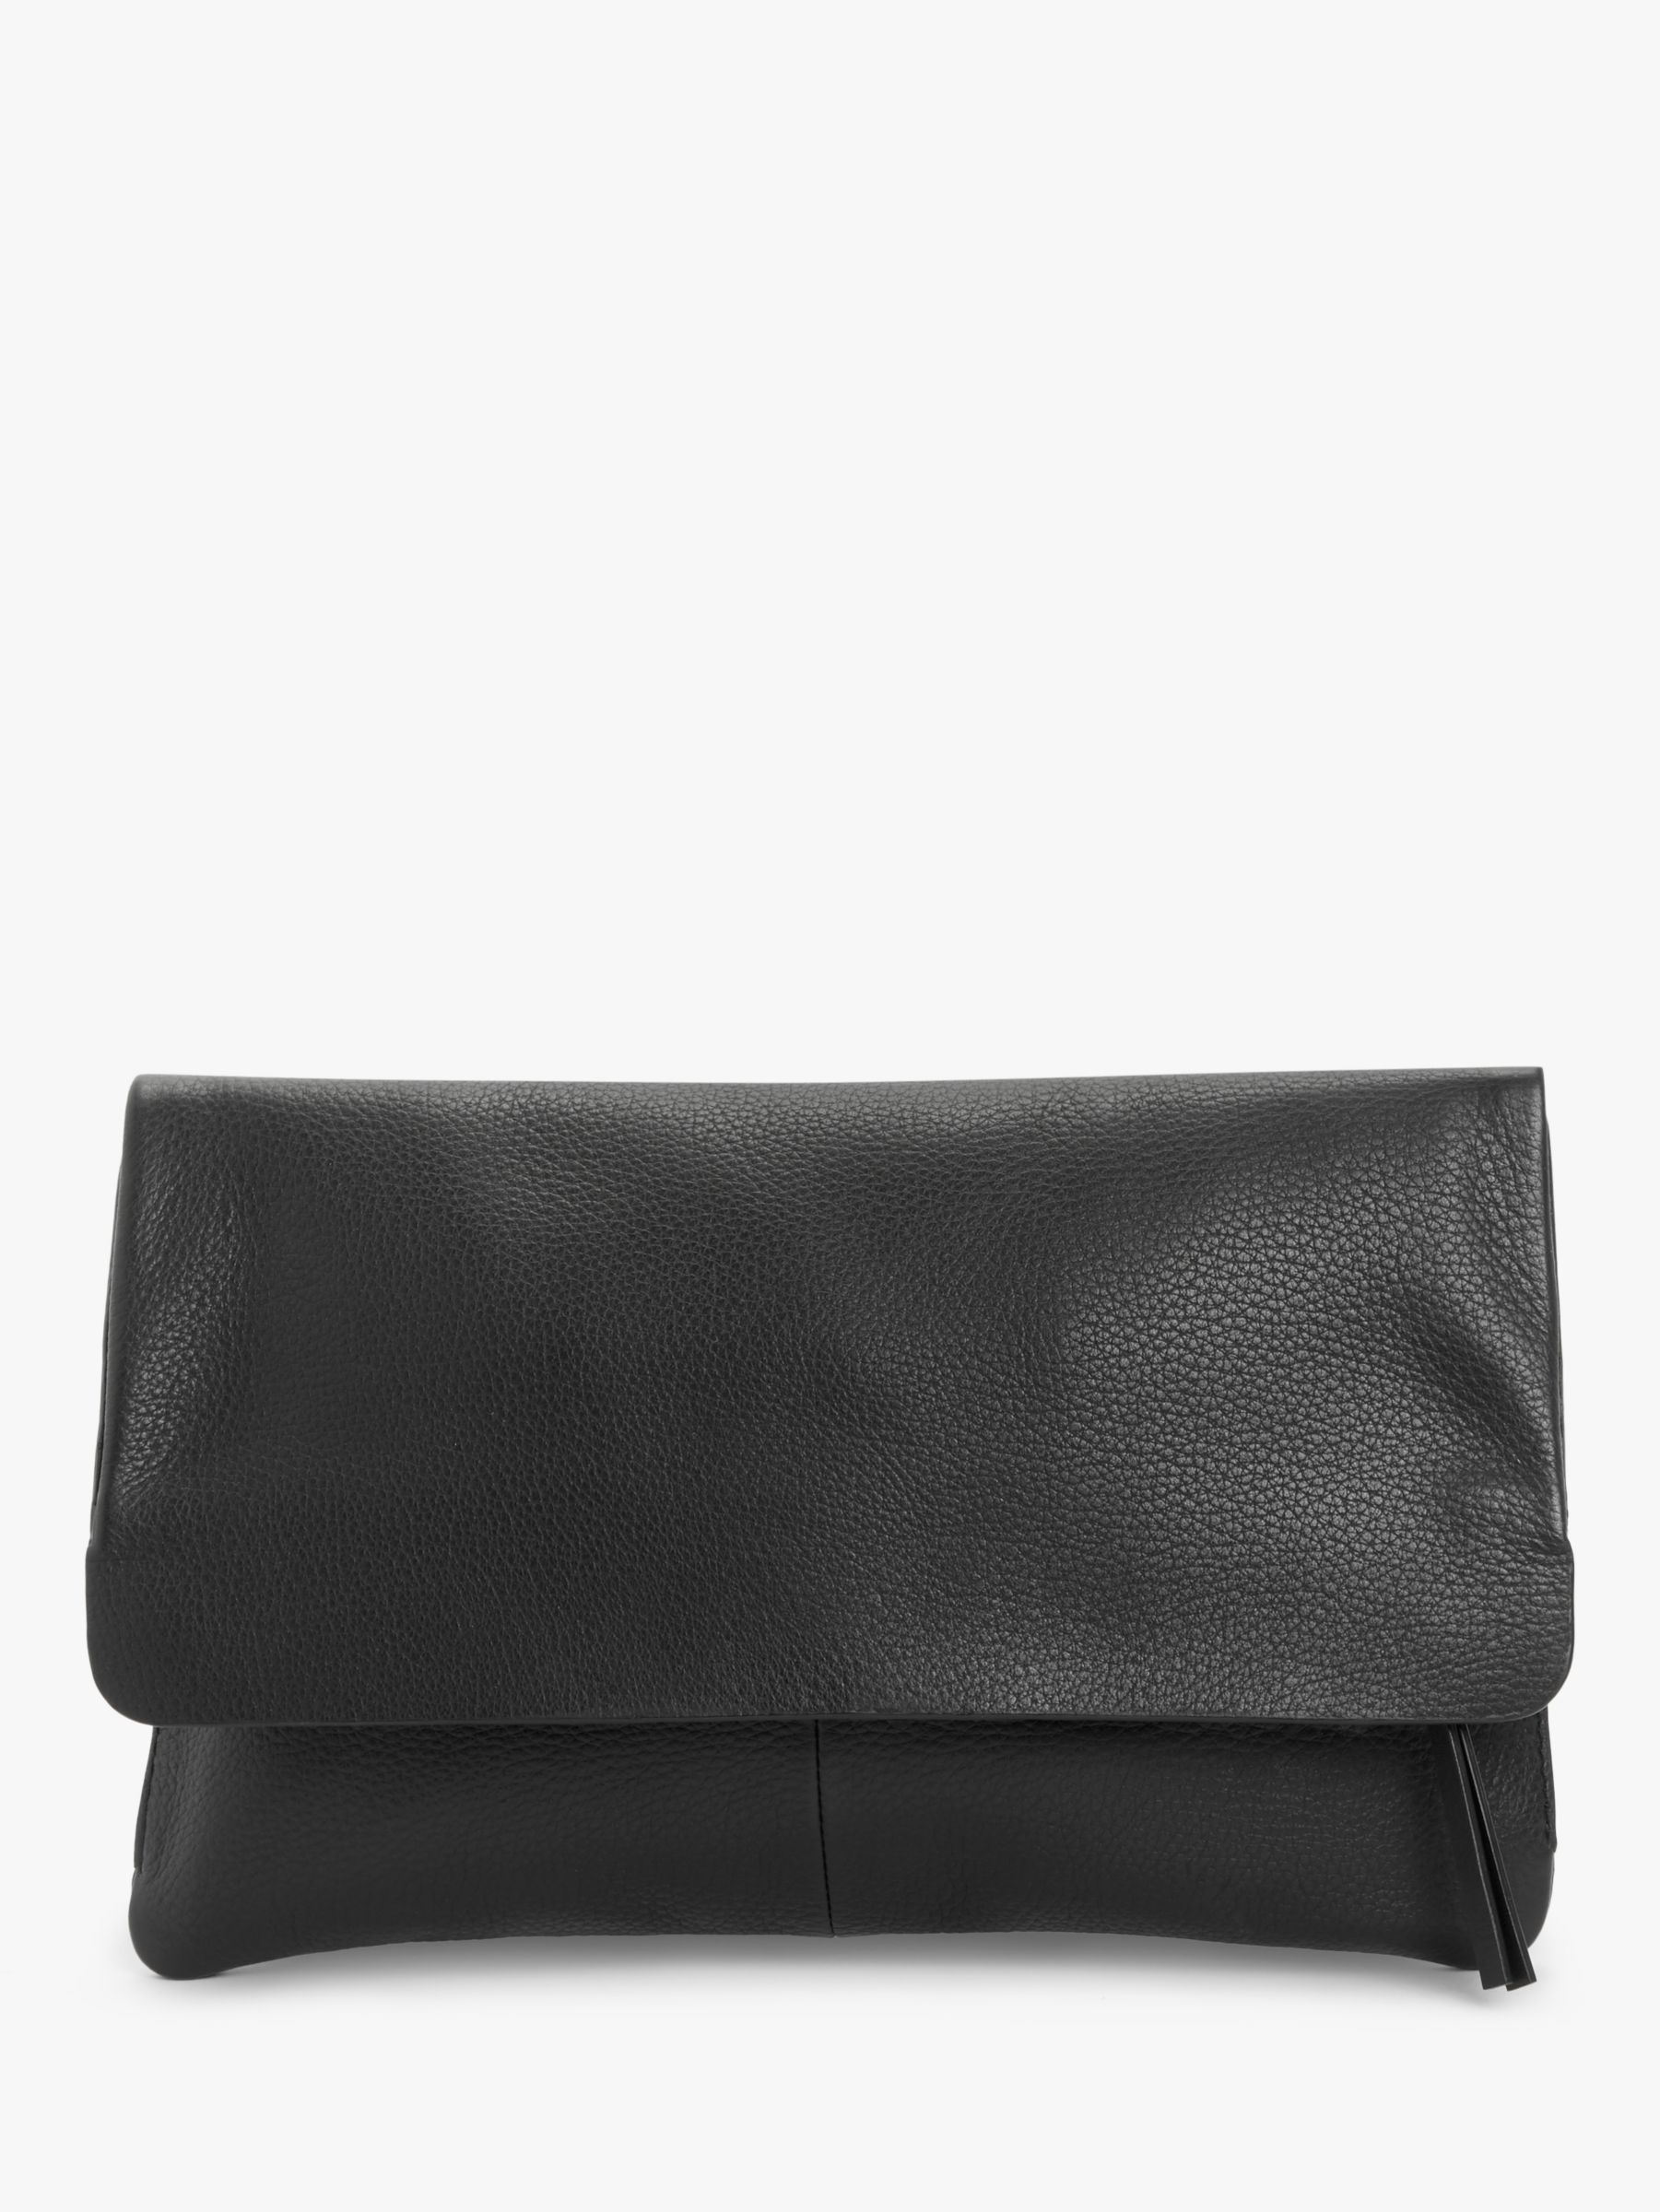 John Lewis & Partners Leather Mistry Clutch Bag, Black at John Lewis ...